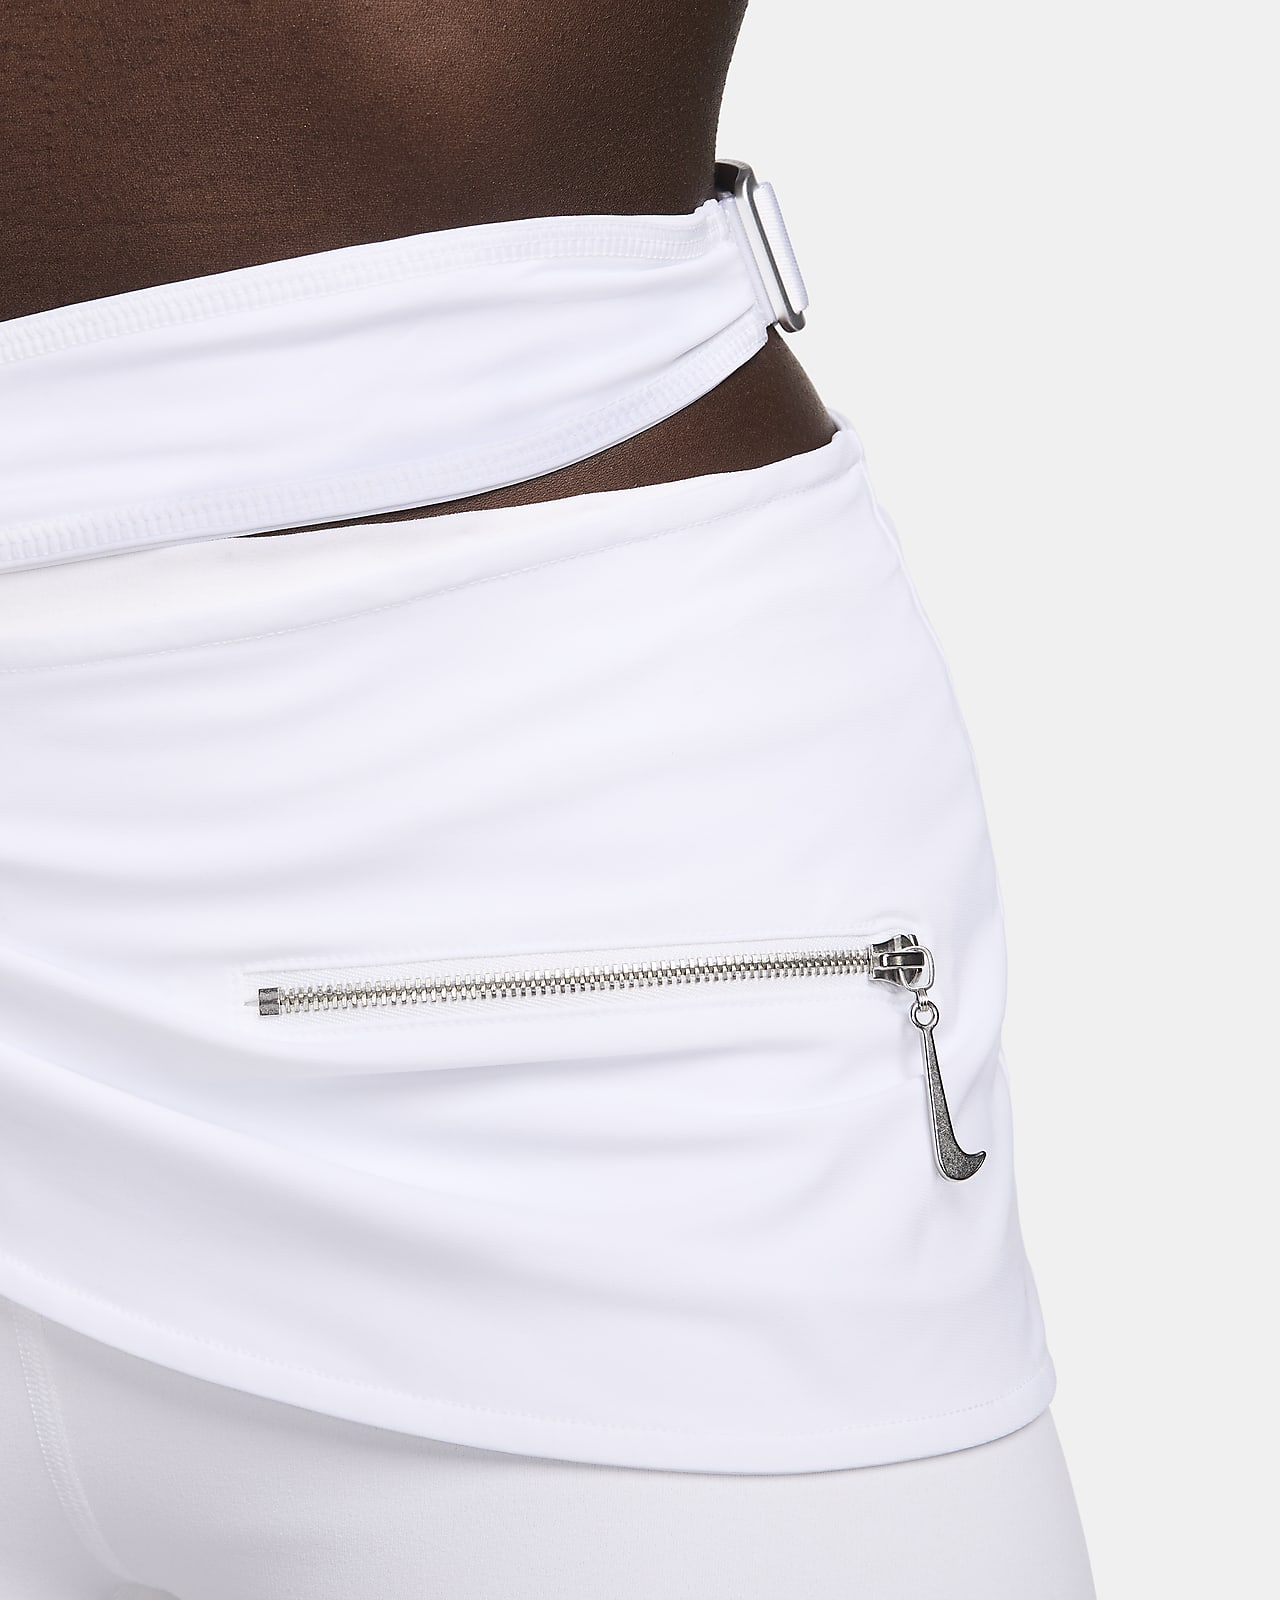 Nike x Jacquemus Le Body Short Off-White